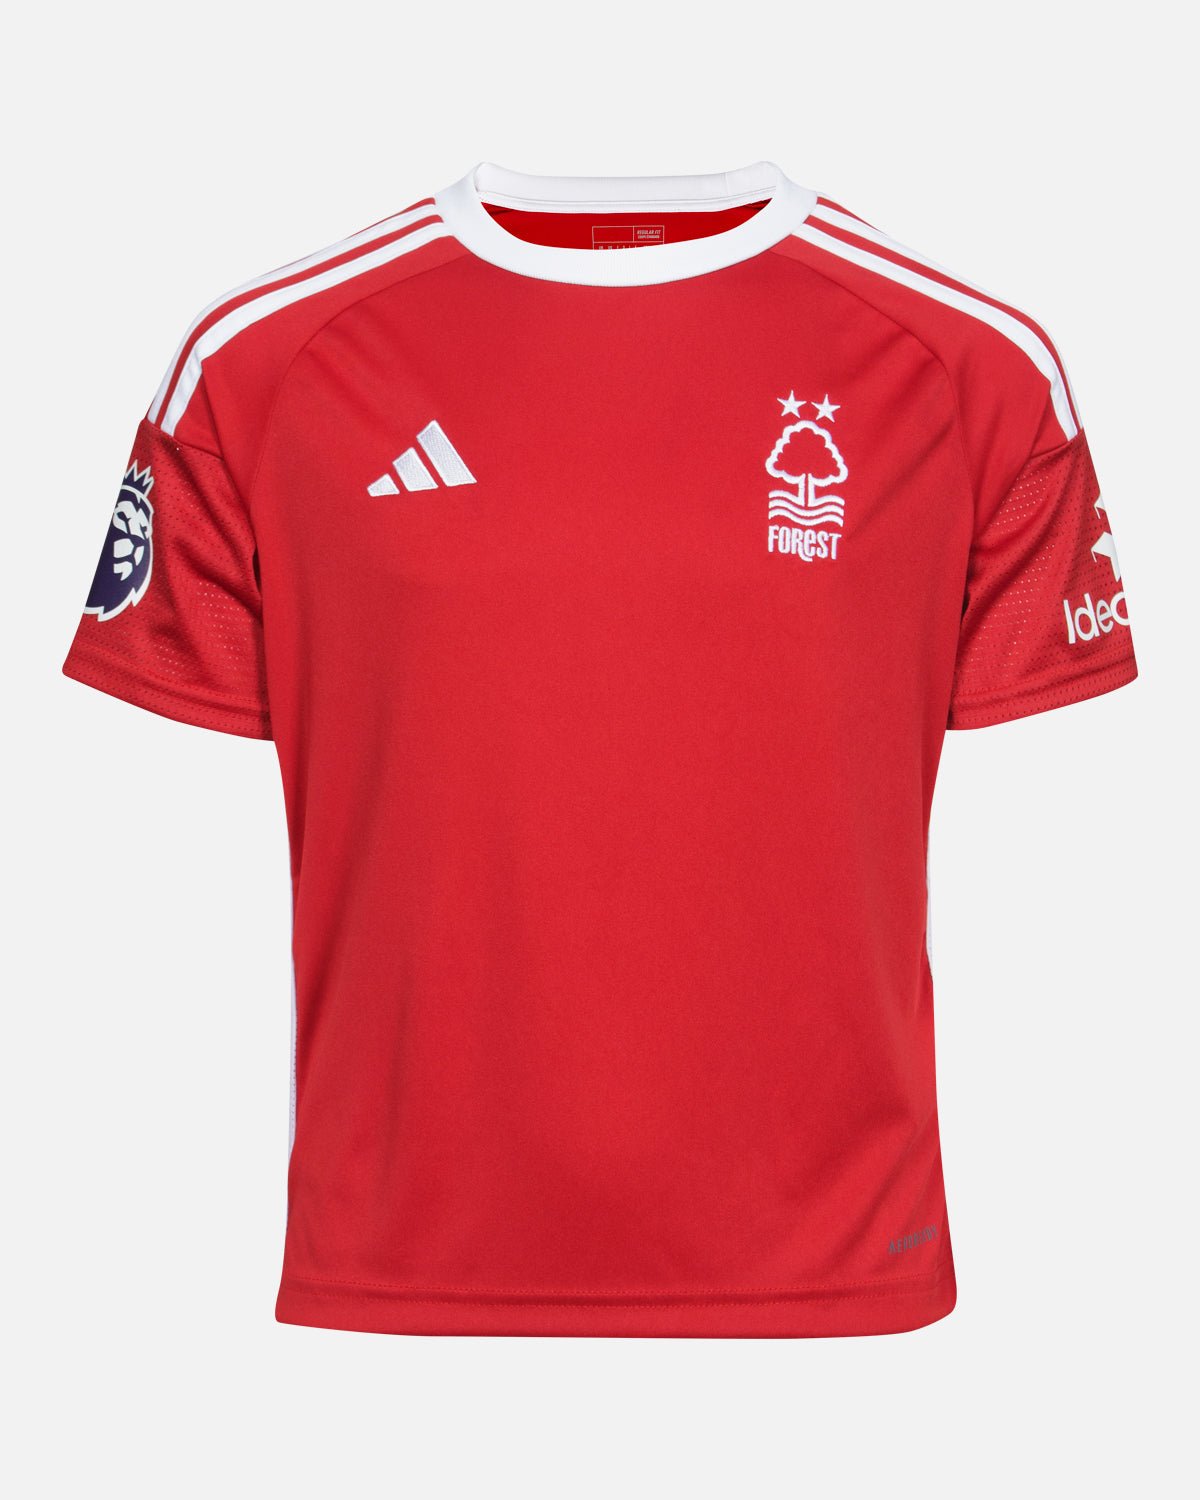 NFFC Junior Home Shirt 23-24 - Hudson-Odoi 14 - Nottingham Forest FC